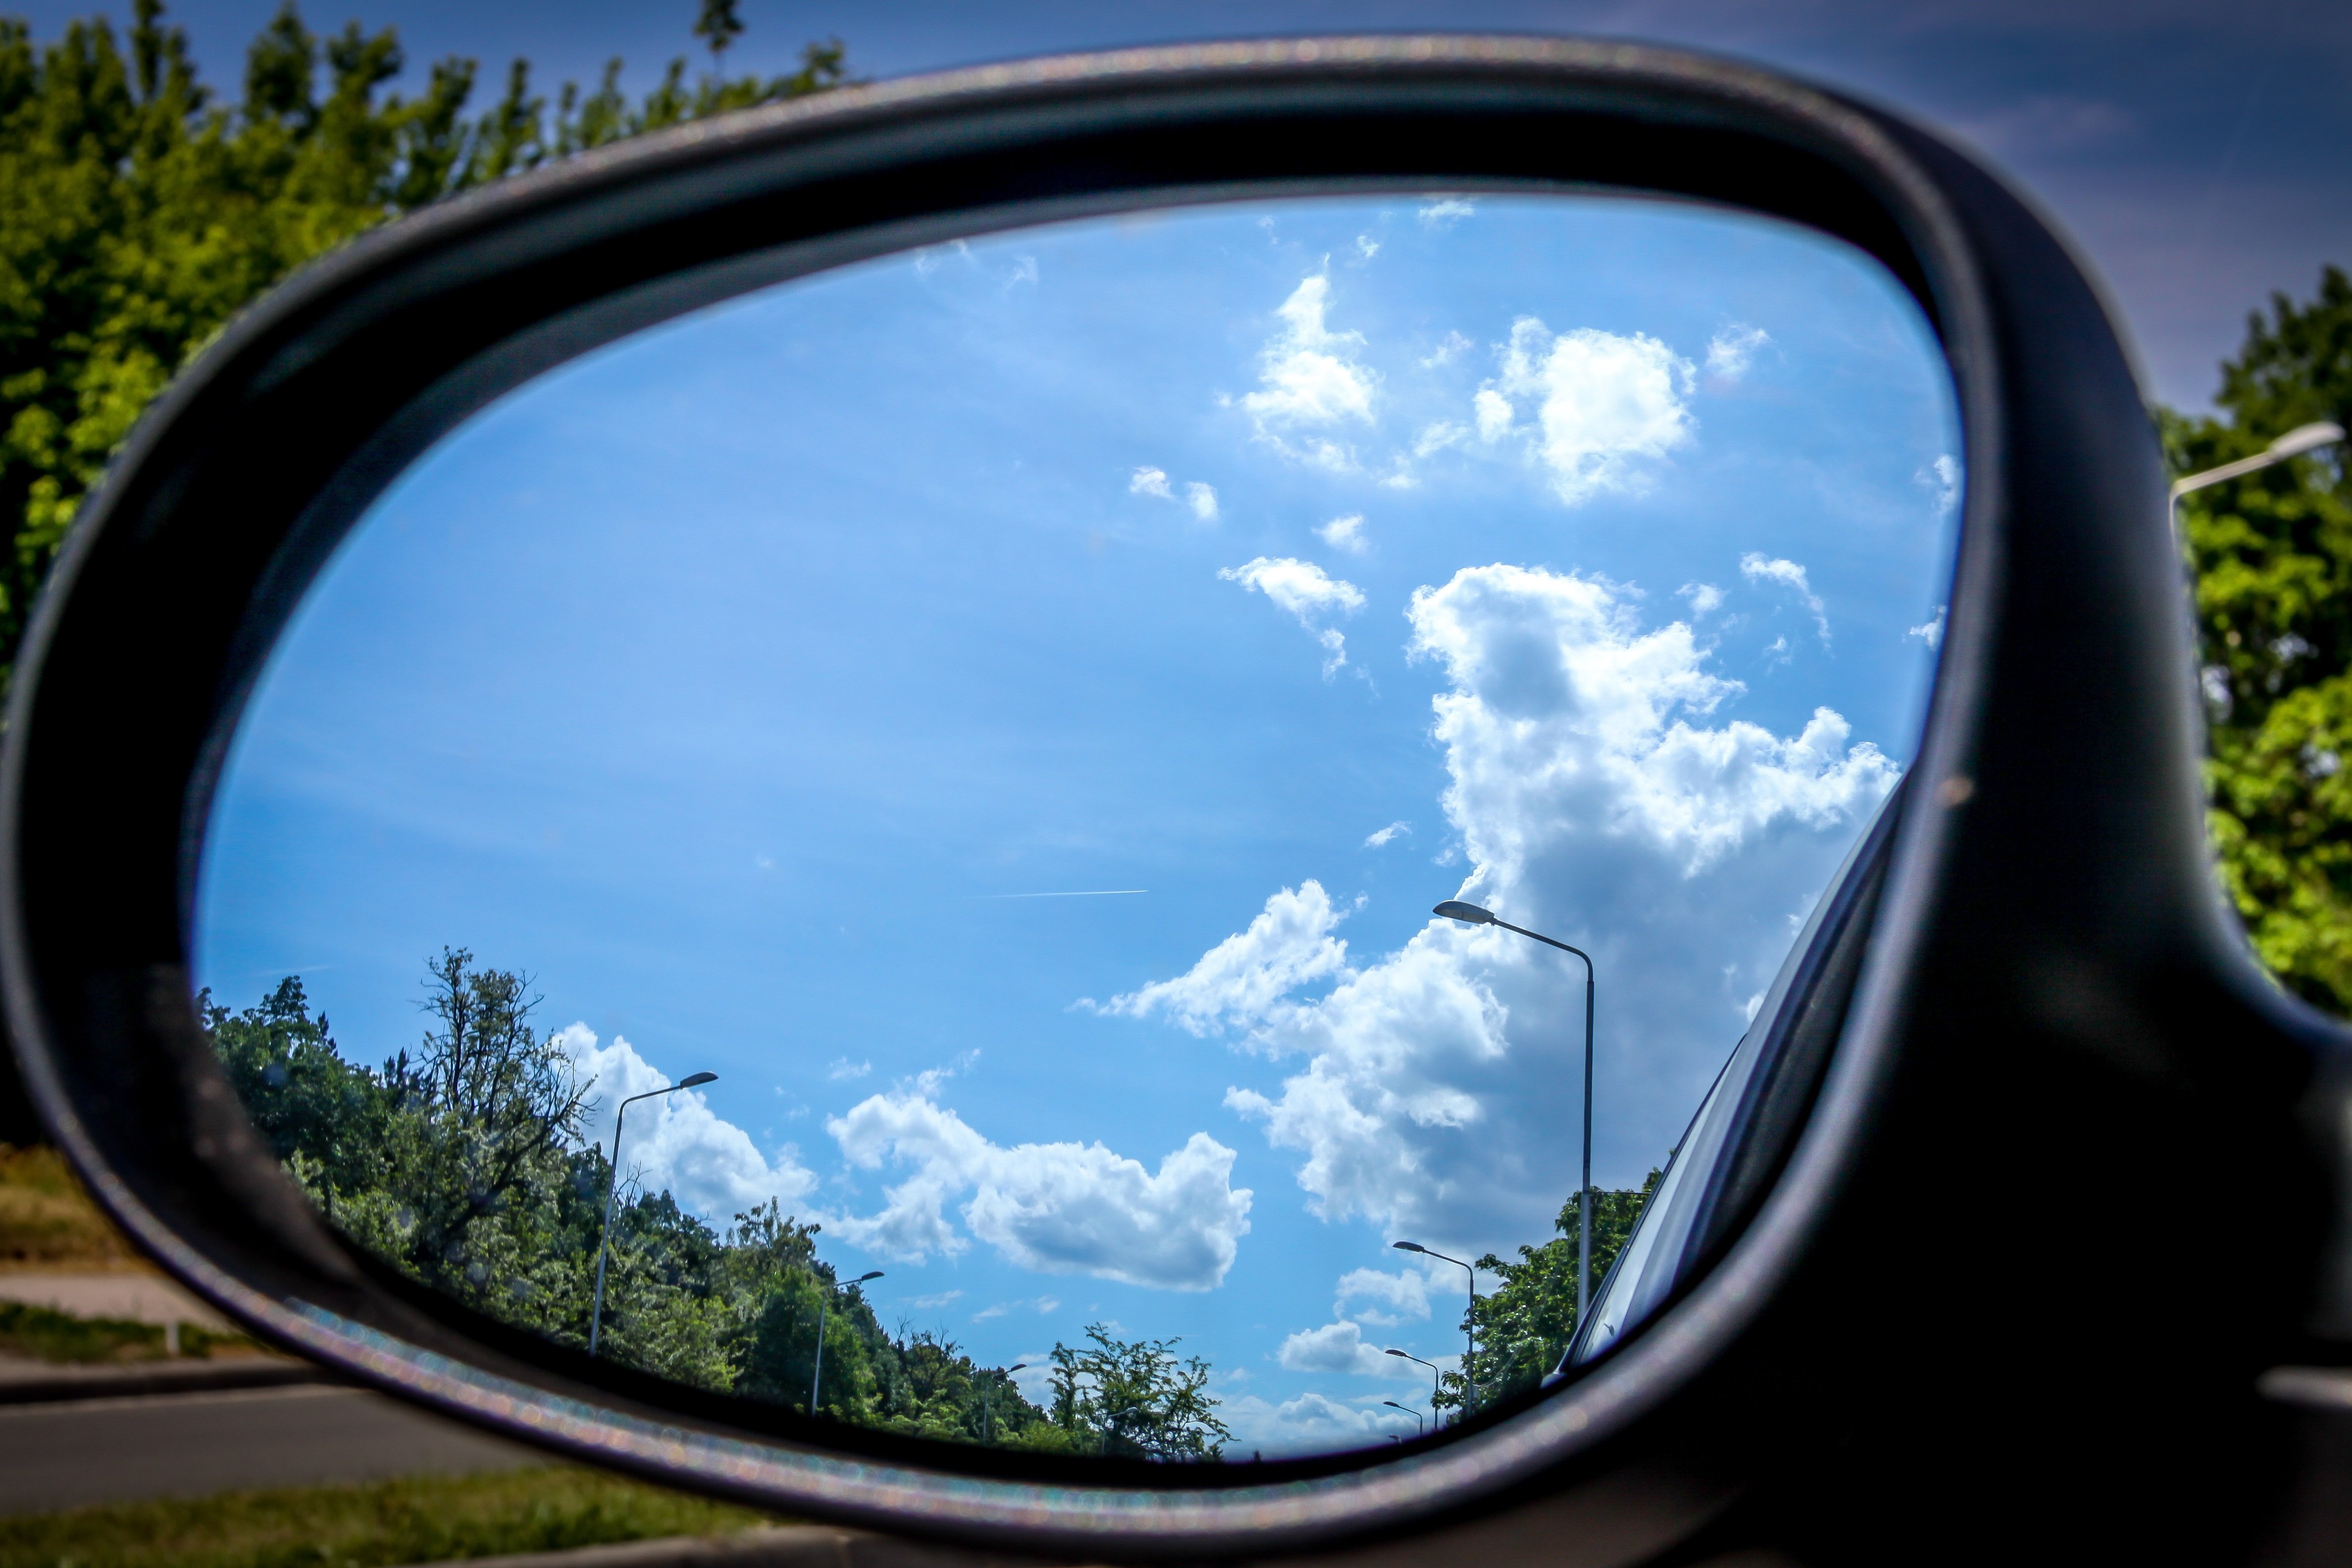 Glimpse of your reflection. Окно машины. Отражение в зеркале. Зеркало автомобиля. Отражение в зеркале машины.